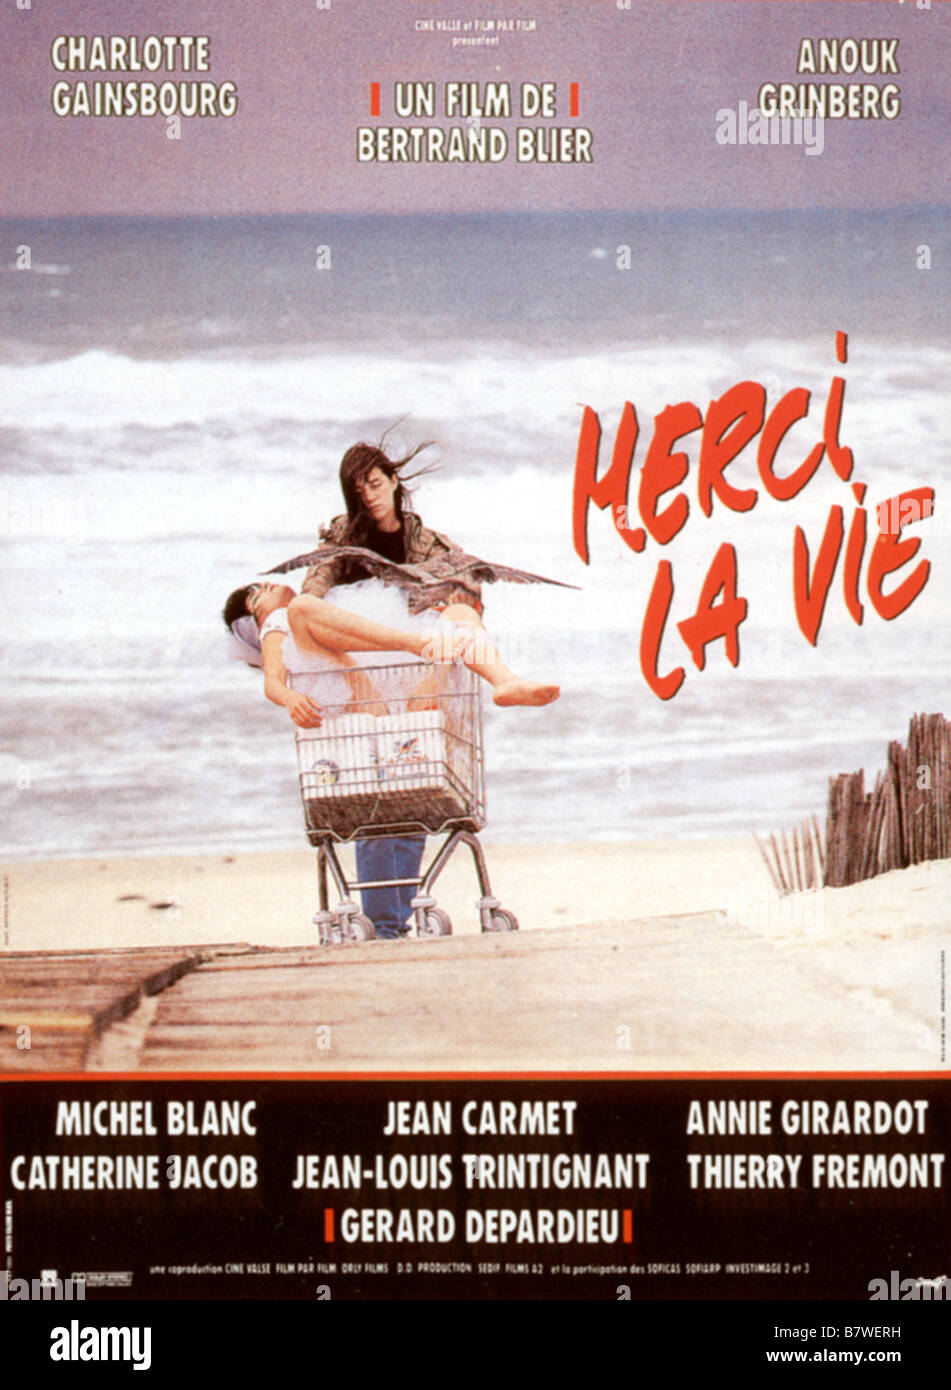 Merci la vie Year: 1991 - France Charlotte Gainsbourg, Anouk Grinberg  Director: Bertrand Blier Movie poster Stock Photo